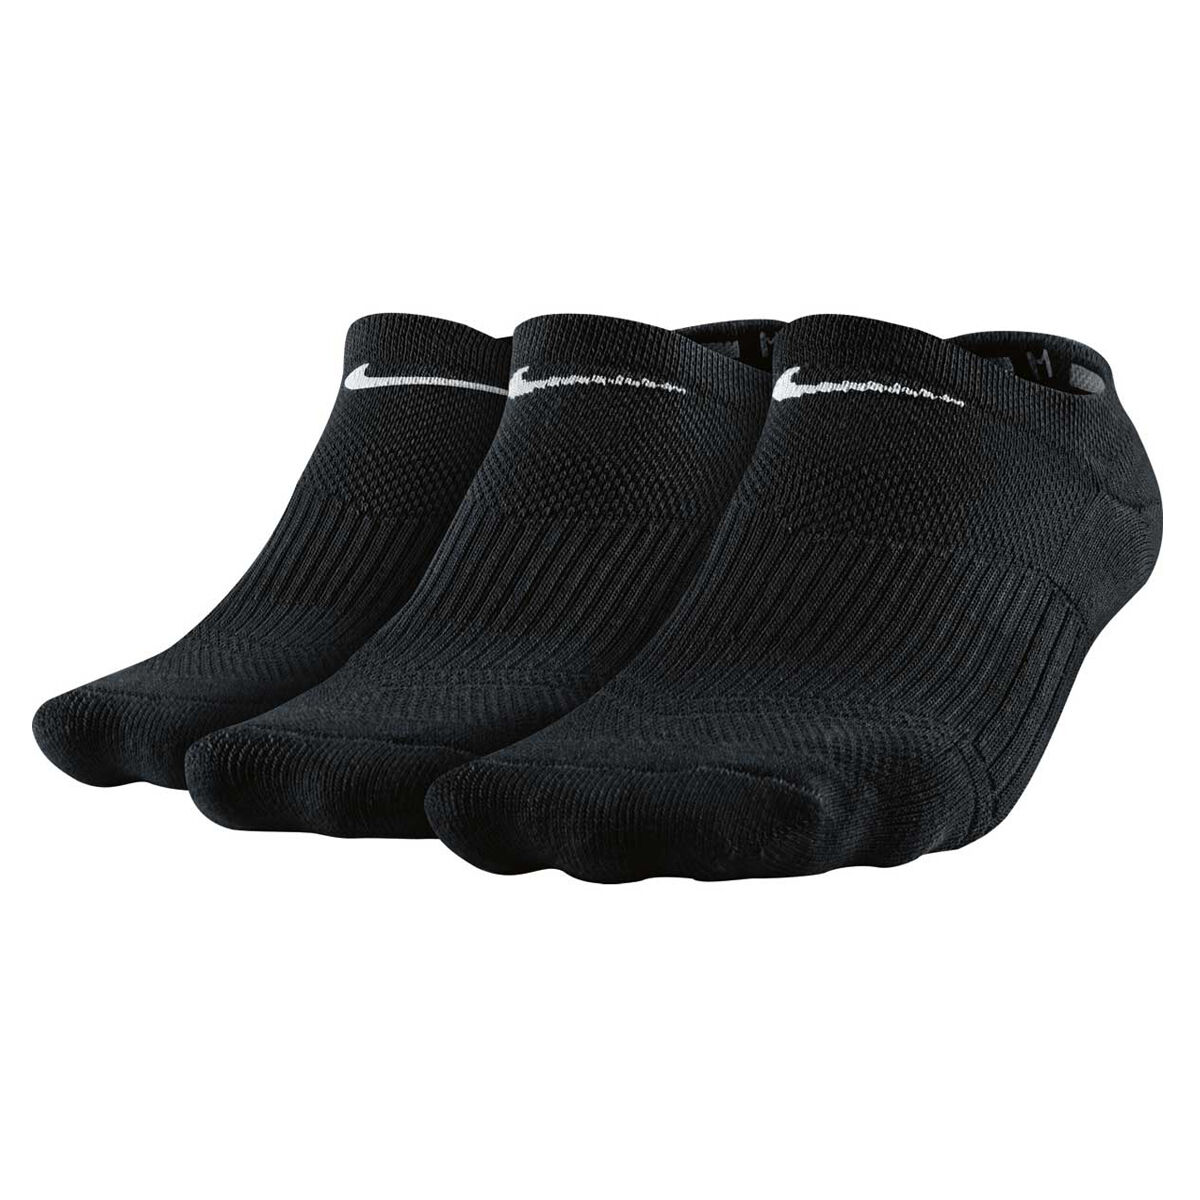 nike women's socks black